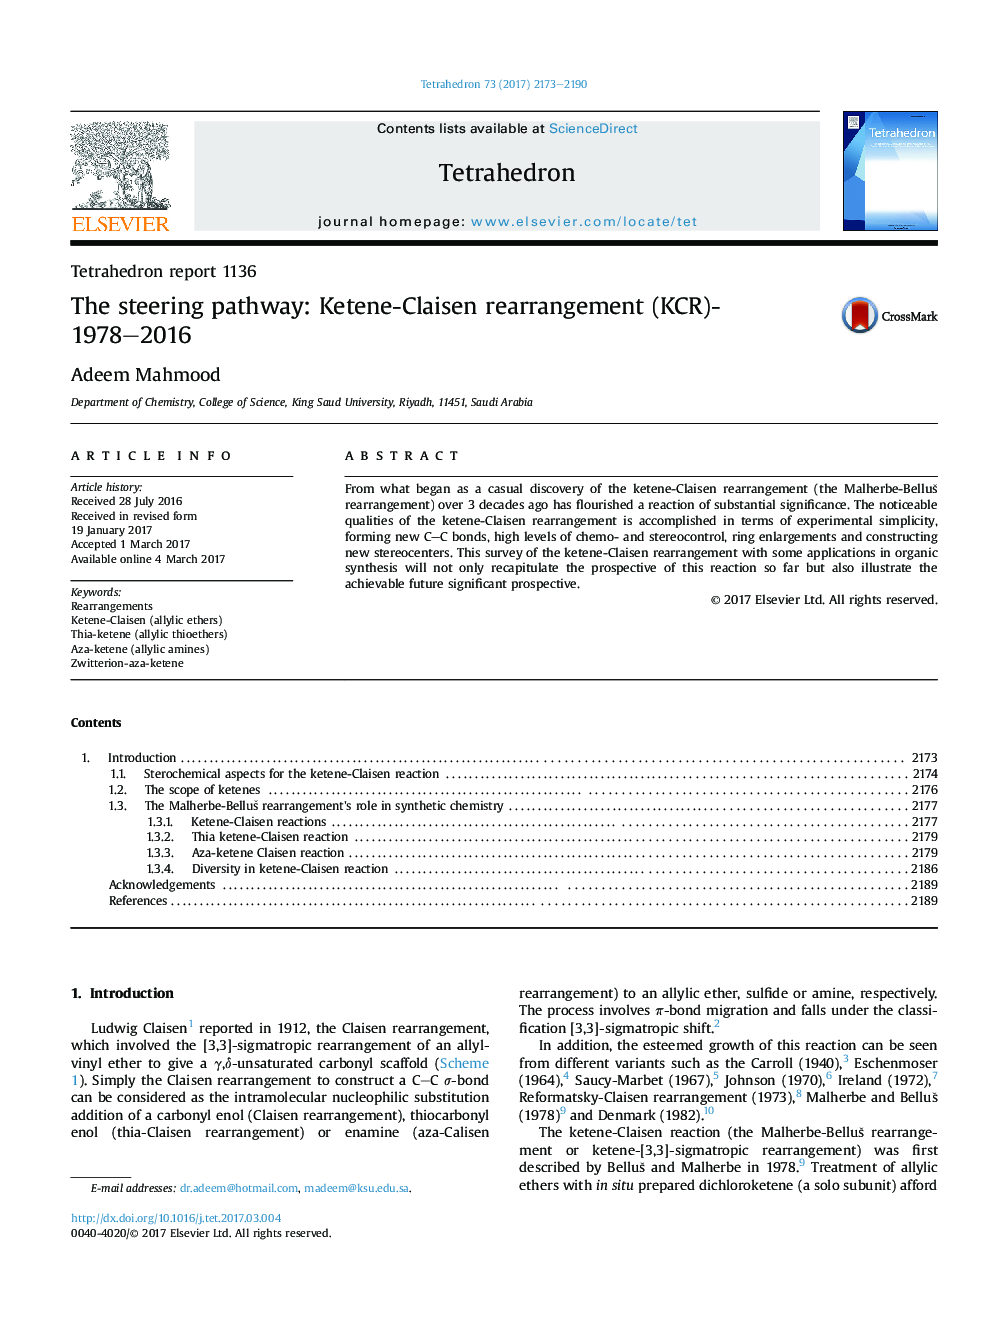 Tetrahedron report 1136The steering pathway: Ketene-Claisen rearrangement (KCR)-1978-2016